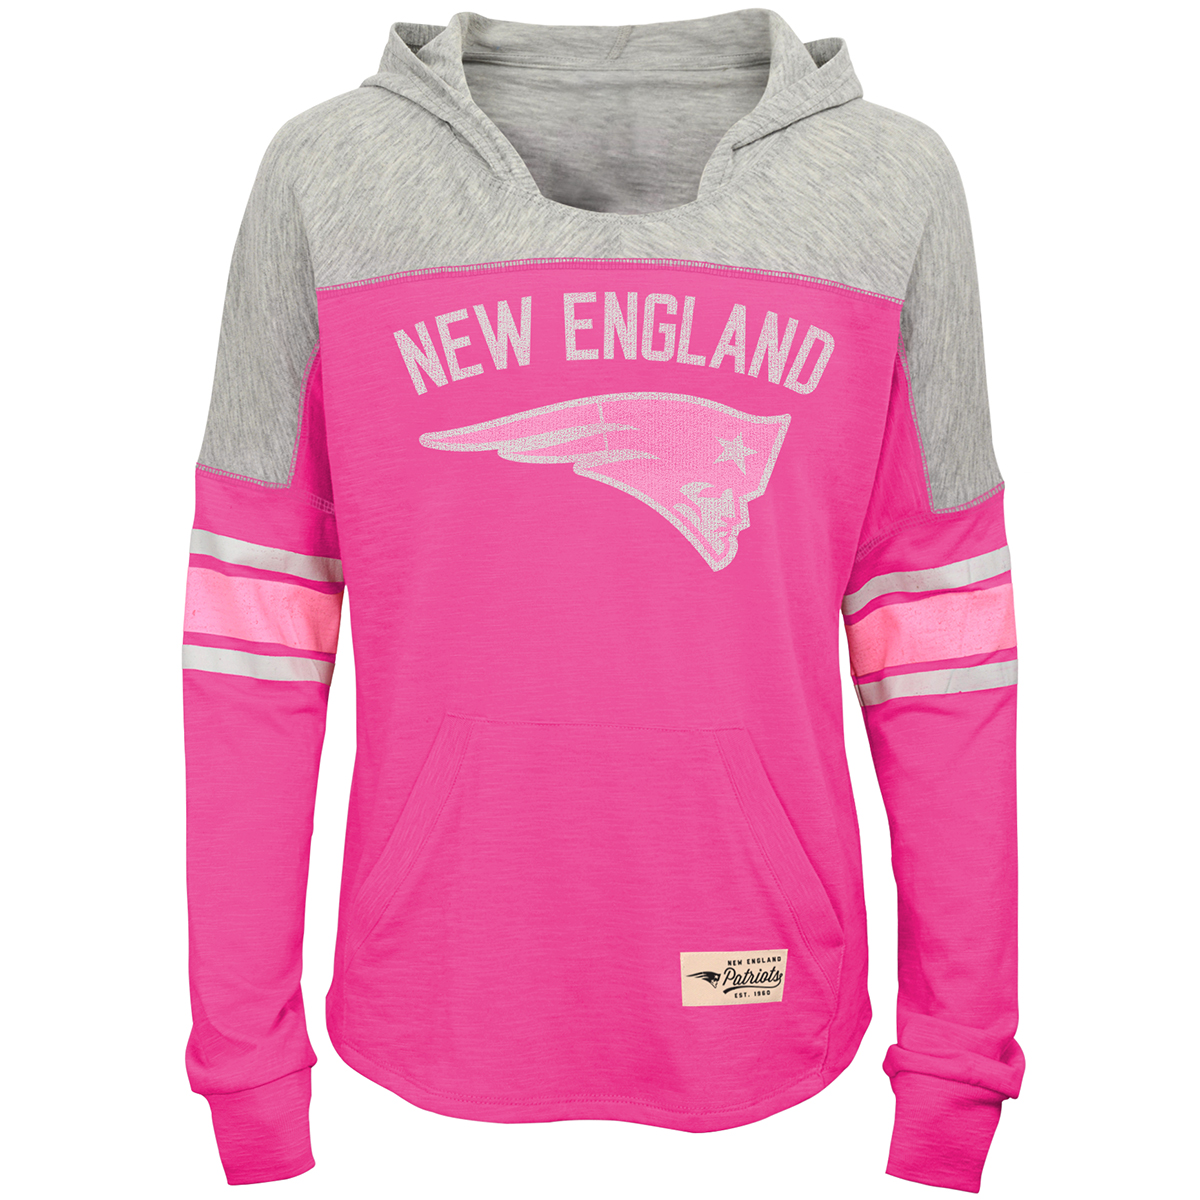 pink patriots sweatshirt